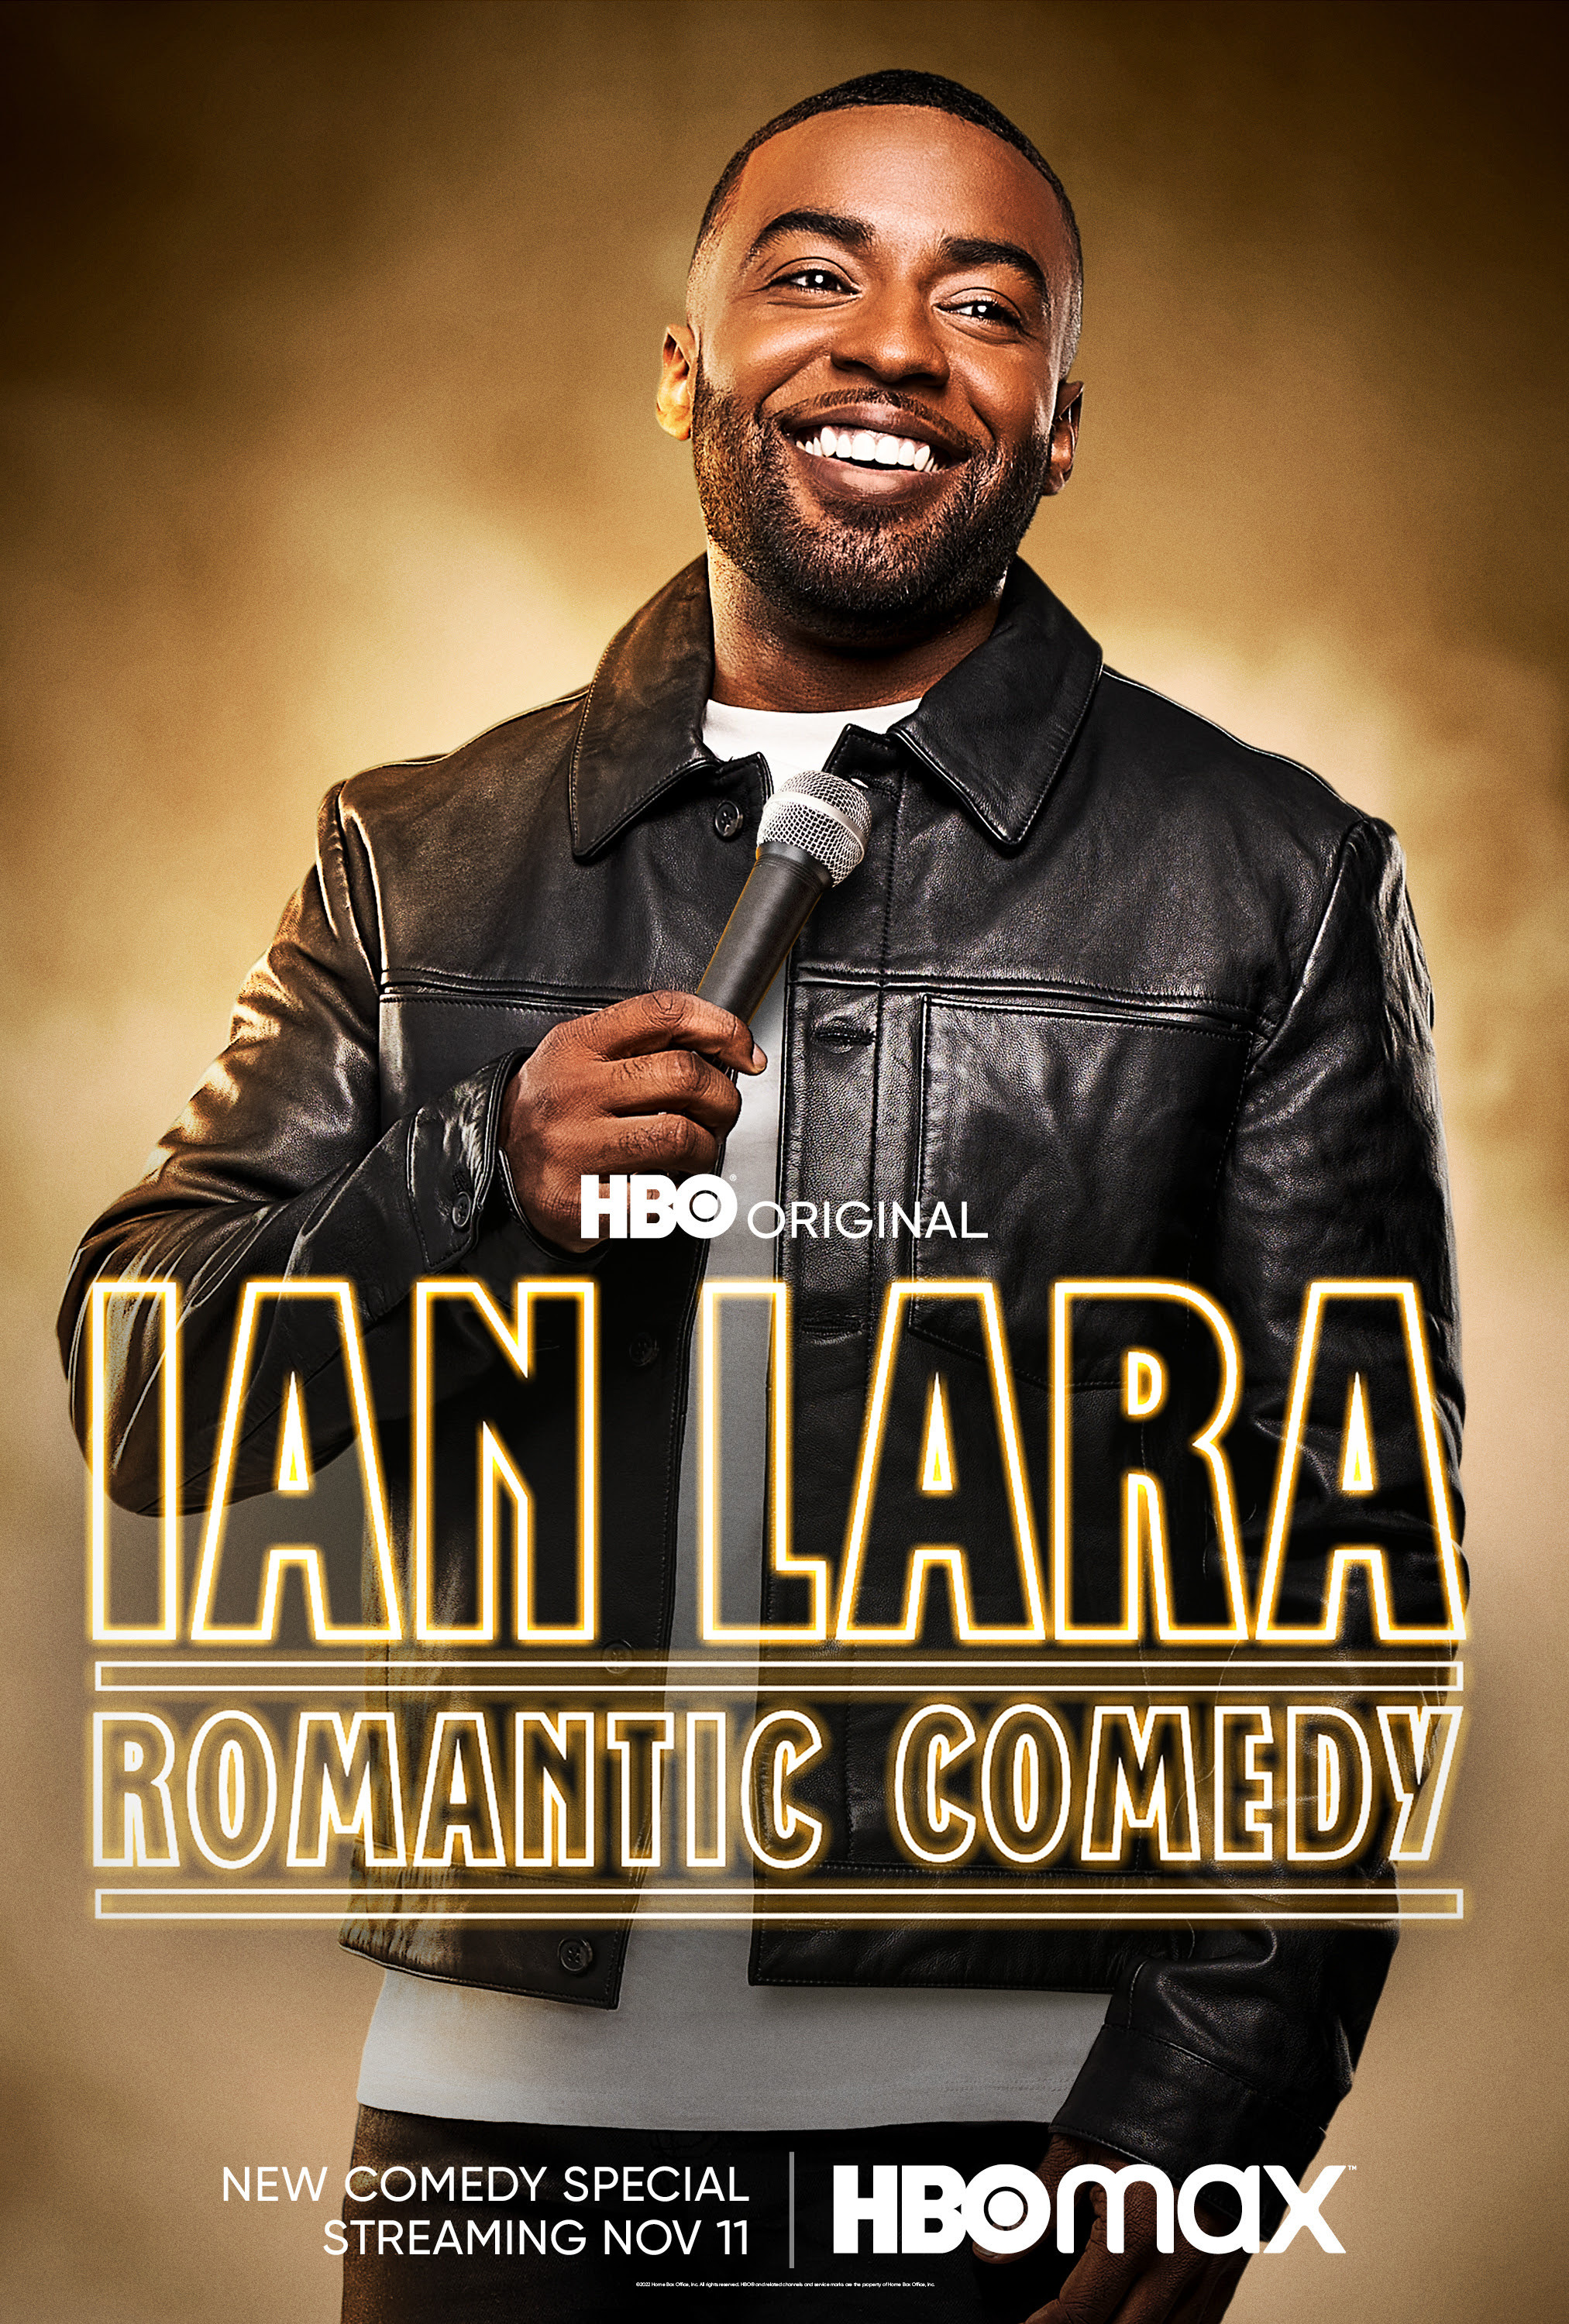 Mega Sized TV Poster Image for Ian Lara: Romantic Comedy 